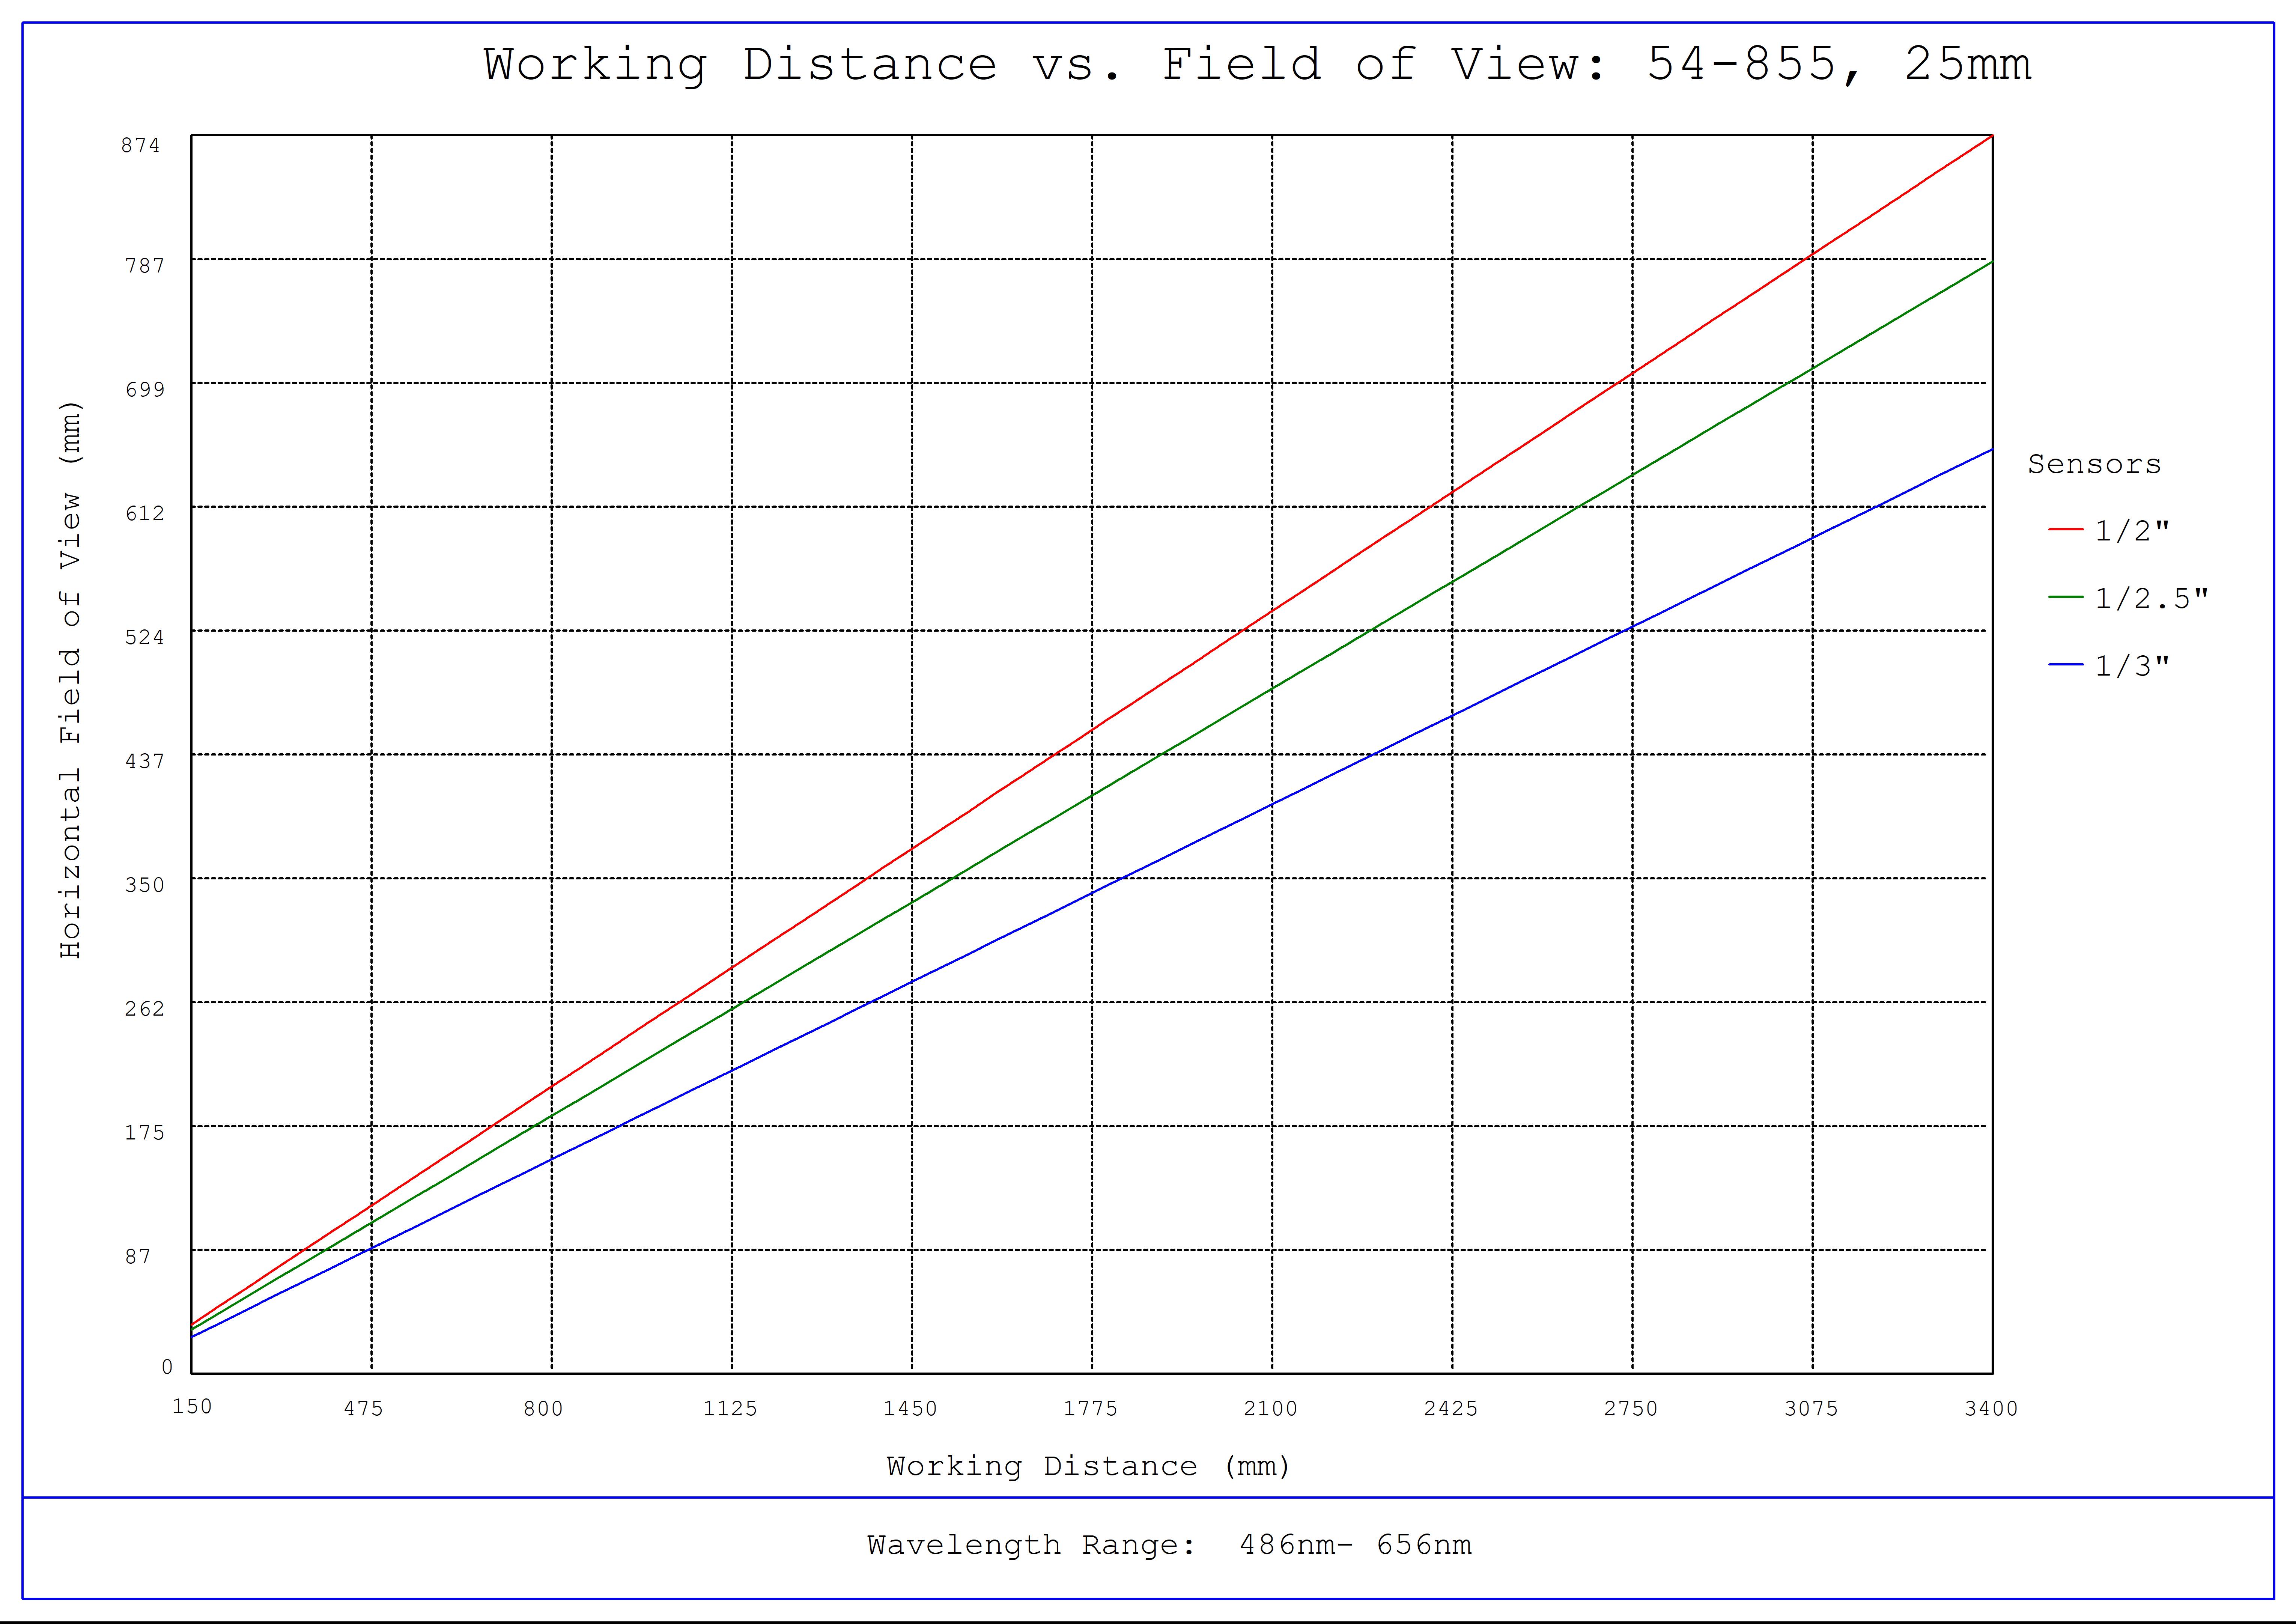 #54-855, f/2.1, 25mm Focal Length Green Series M16 Lens, Working Distance versus Field of View Plot